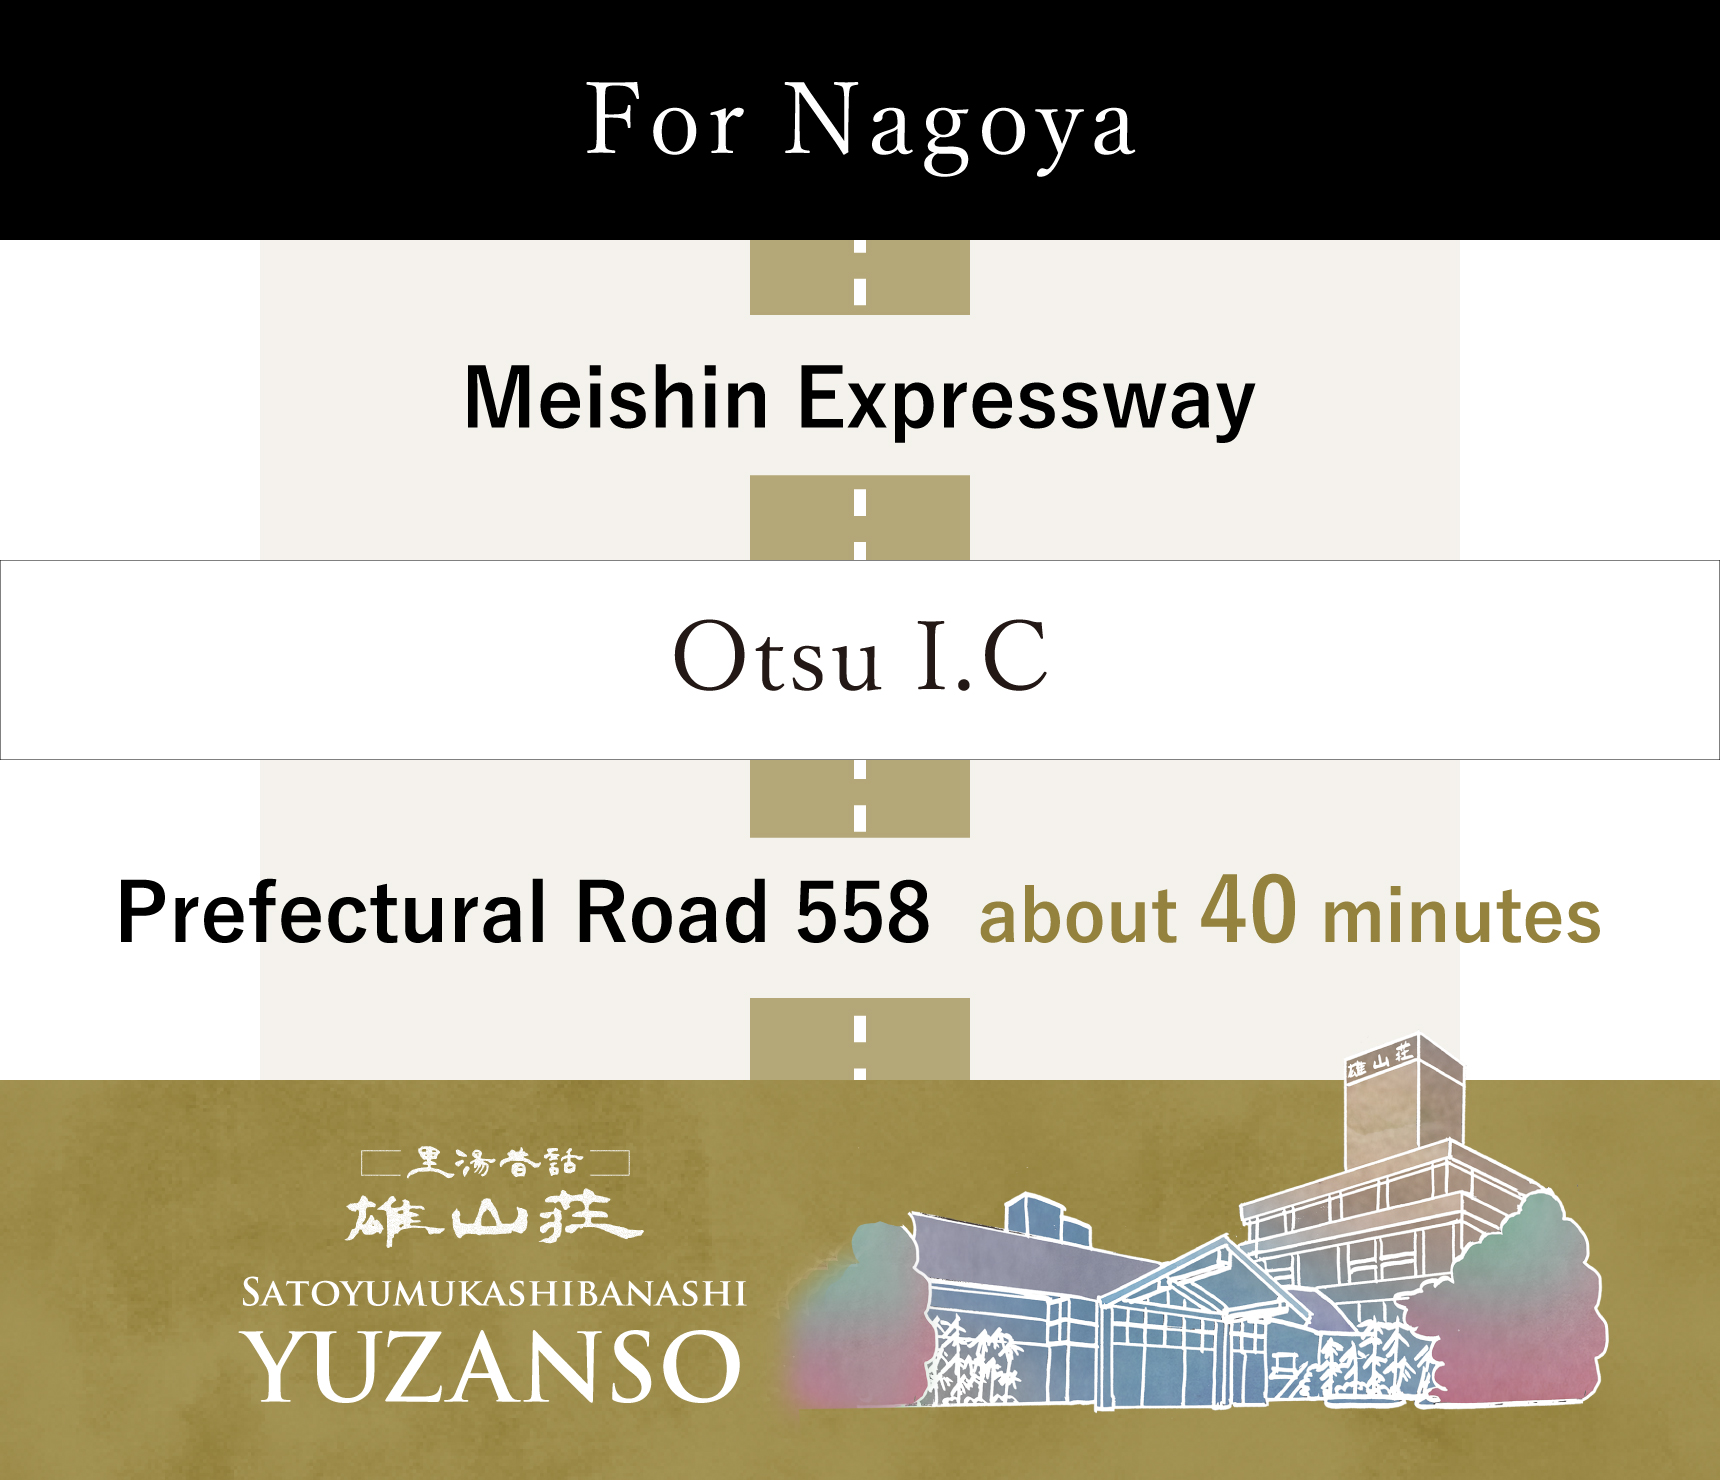 Direction to Nagoya